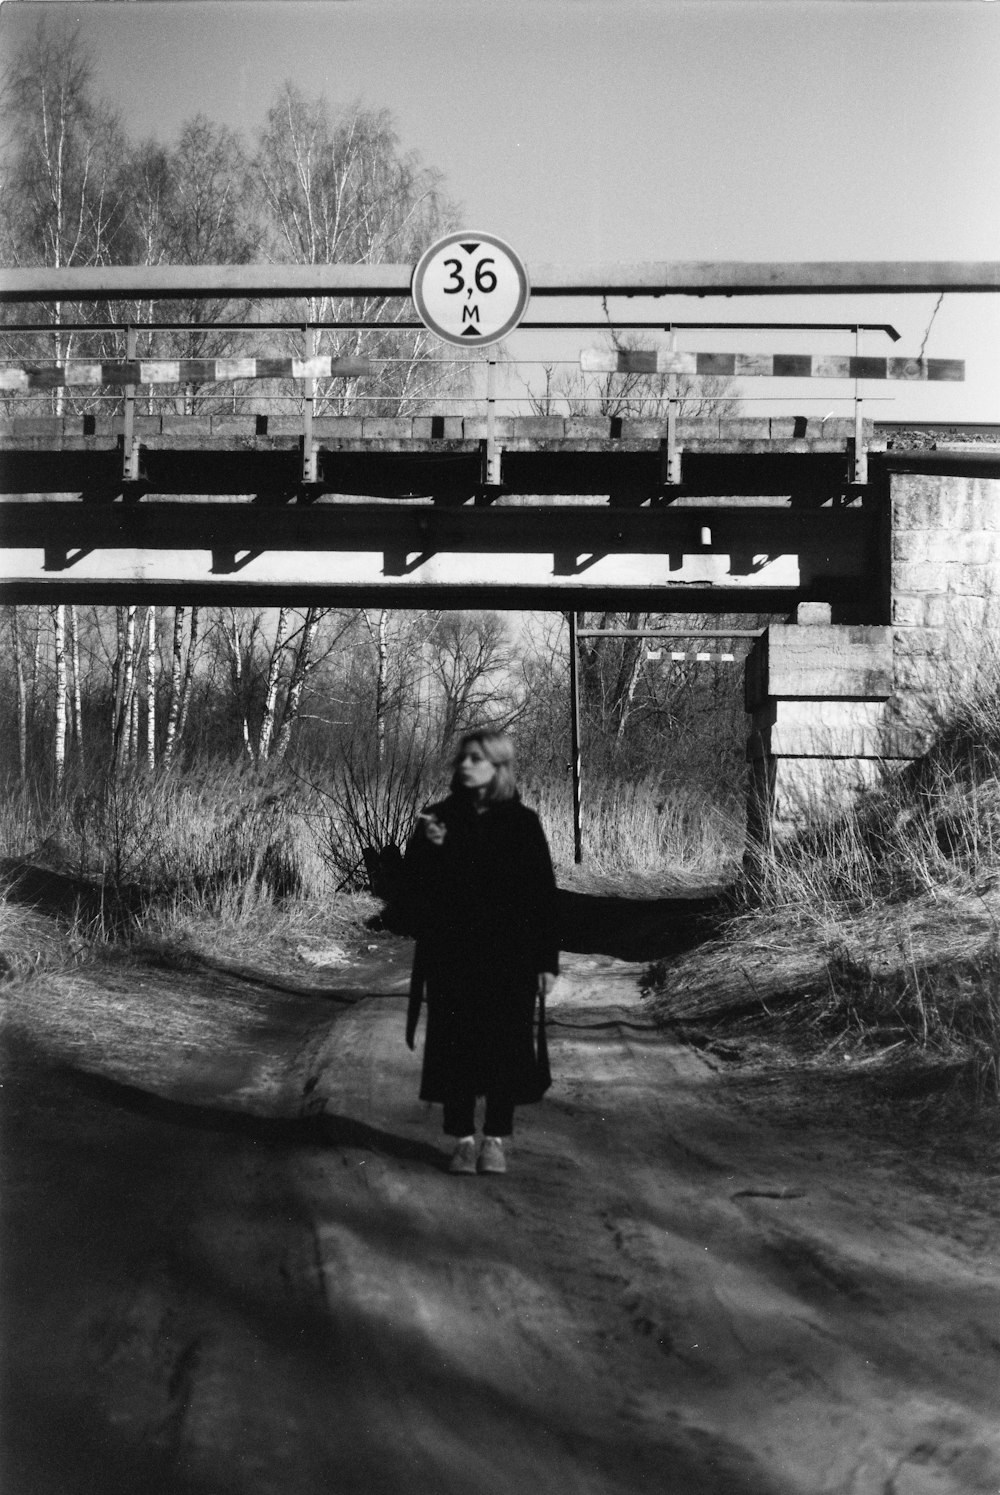 a woman walking down a dirt road under a bridge